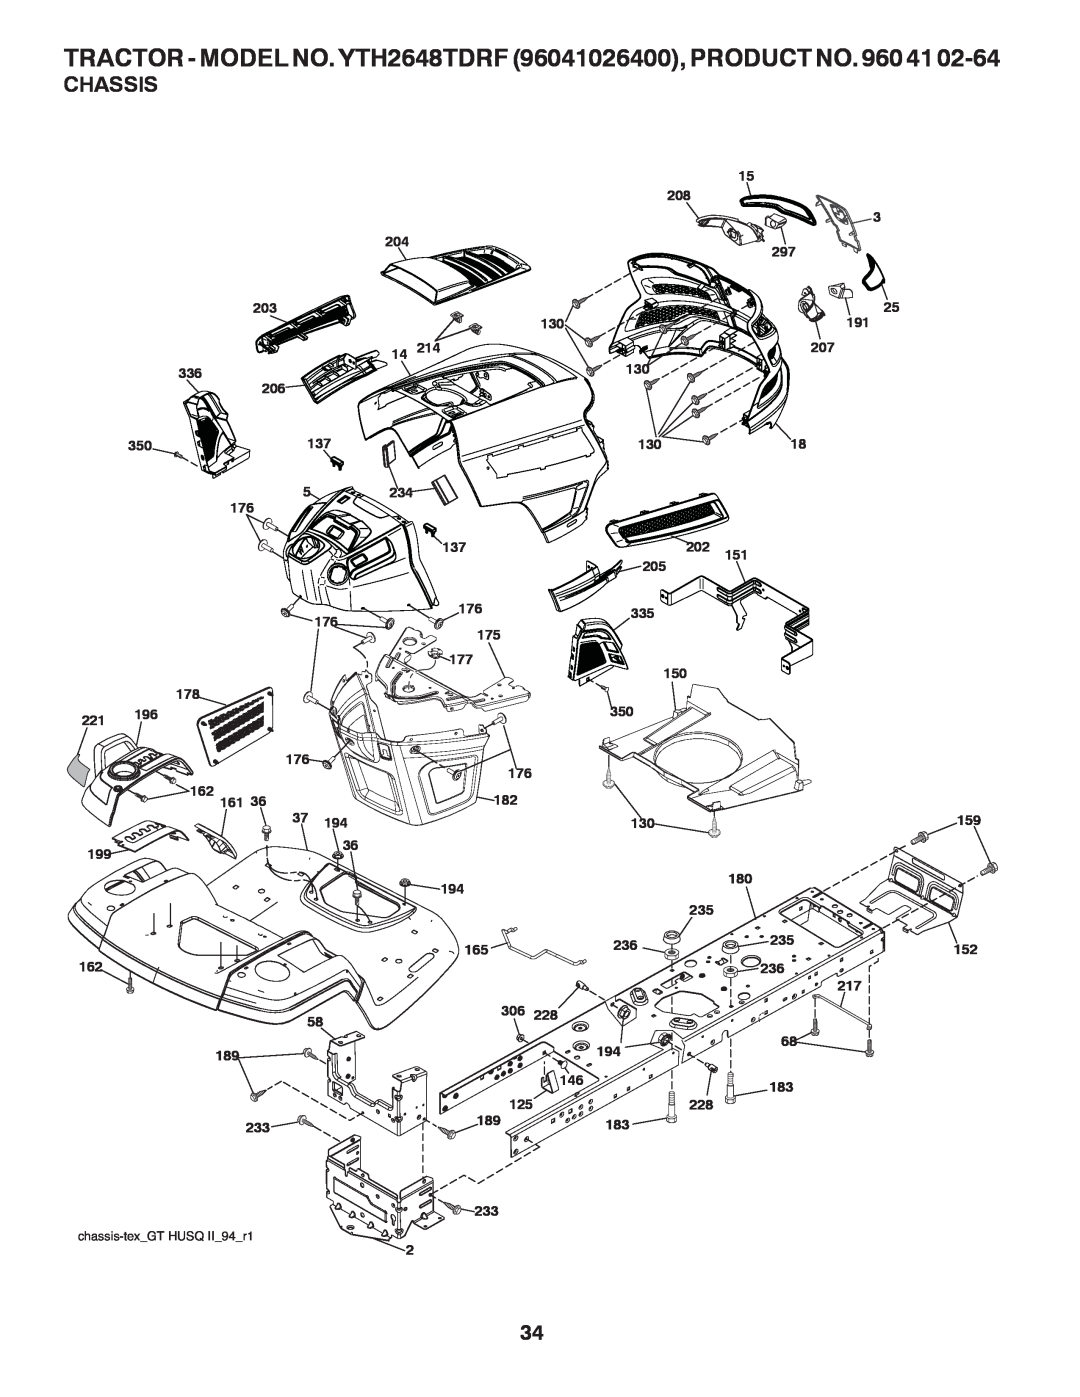 Husqvarna Chassis, TRACTOR - MODEL NO. YTH2648TDRF 96041026400, PRODUCT NO. 960 41, chassis-texGT HUSQ II94r1 